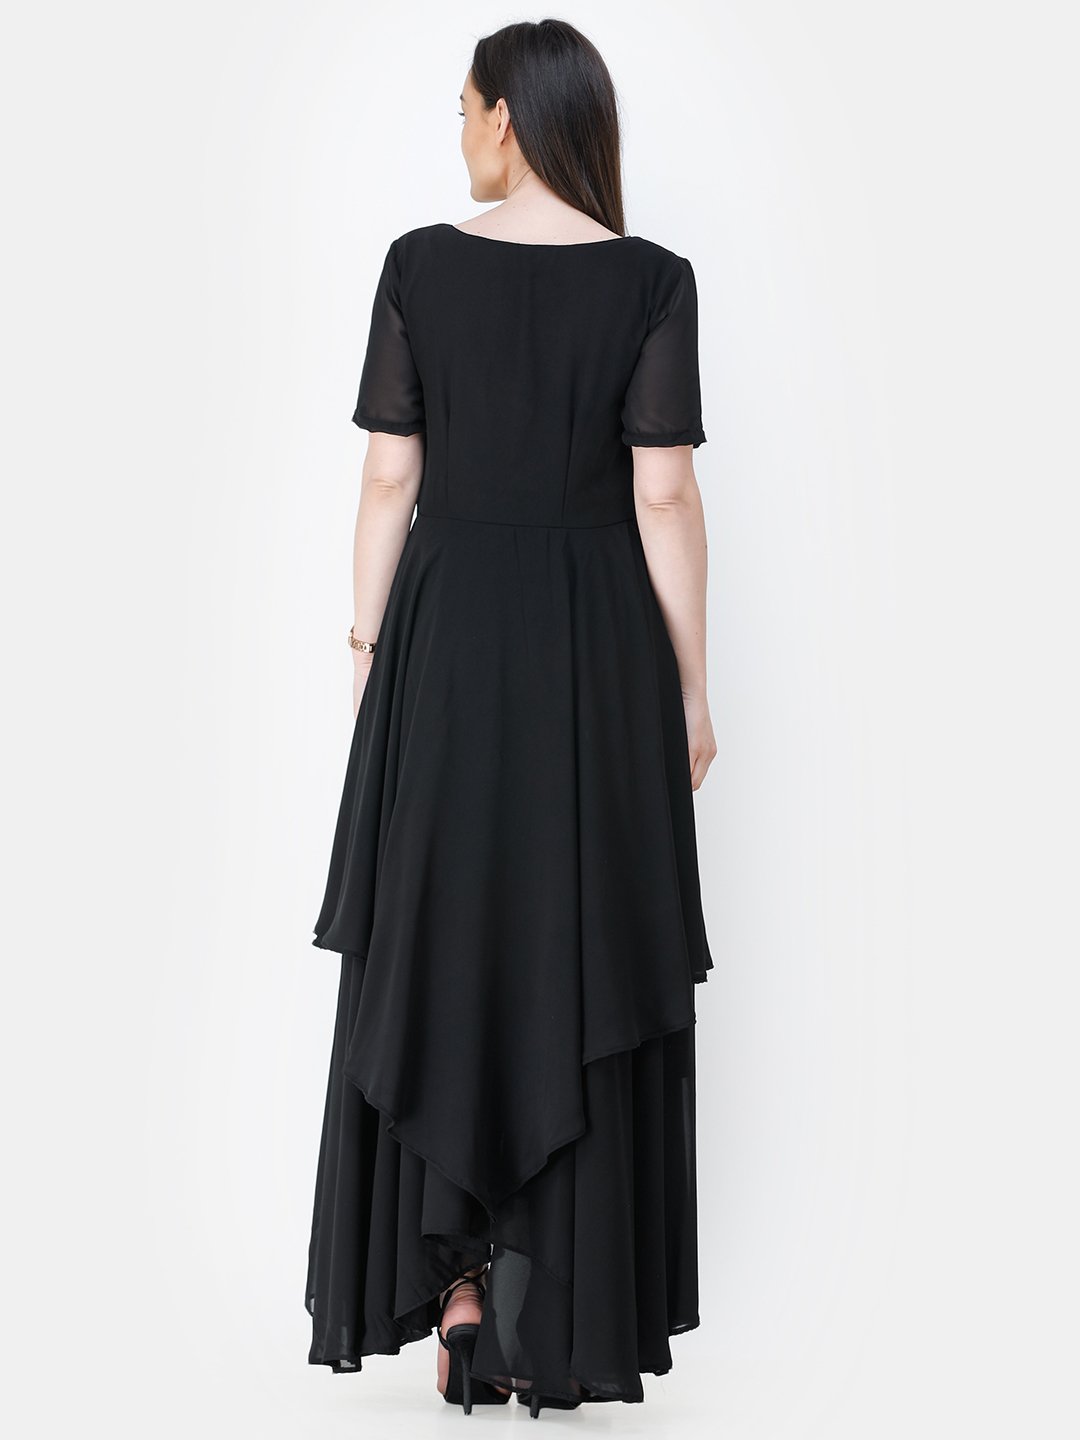 Scorpius black frilled long dress